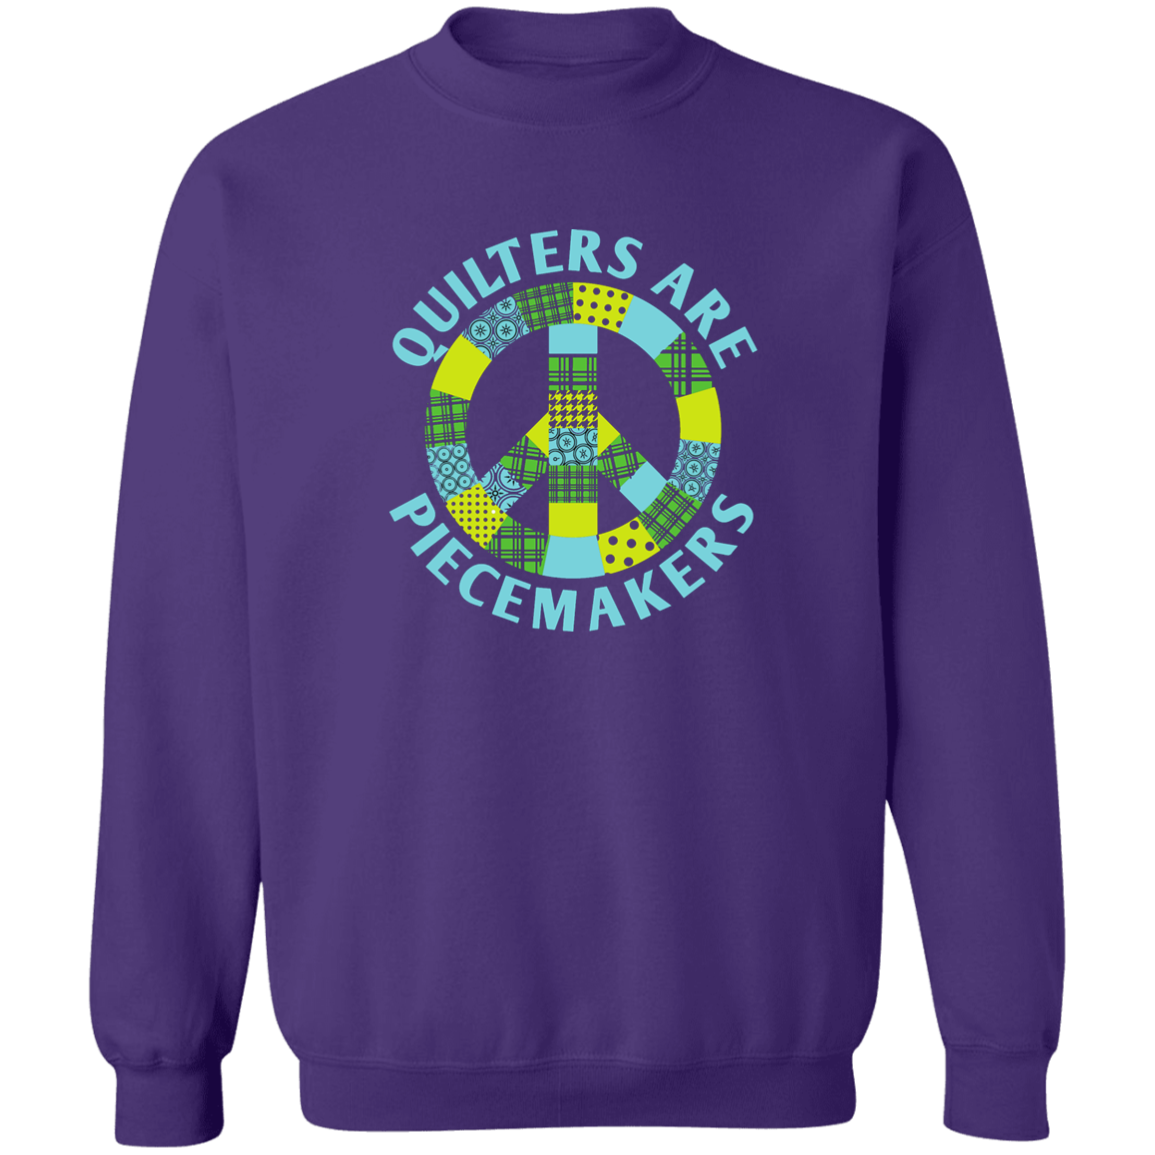 Quilters are Piecemakers Sweatshirt